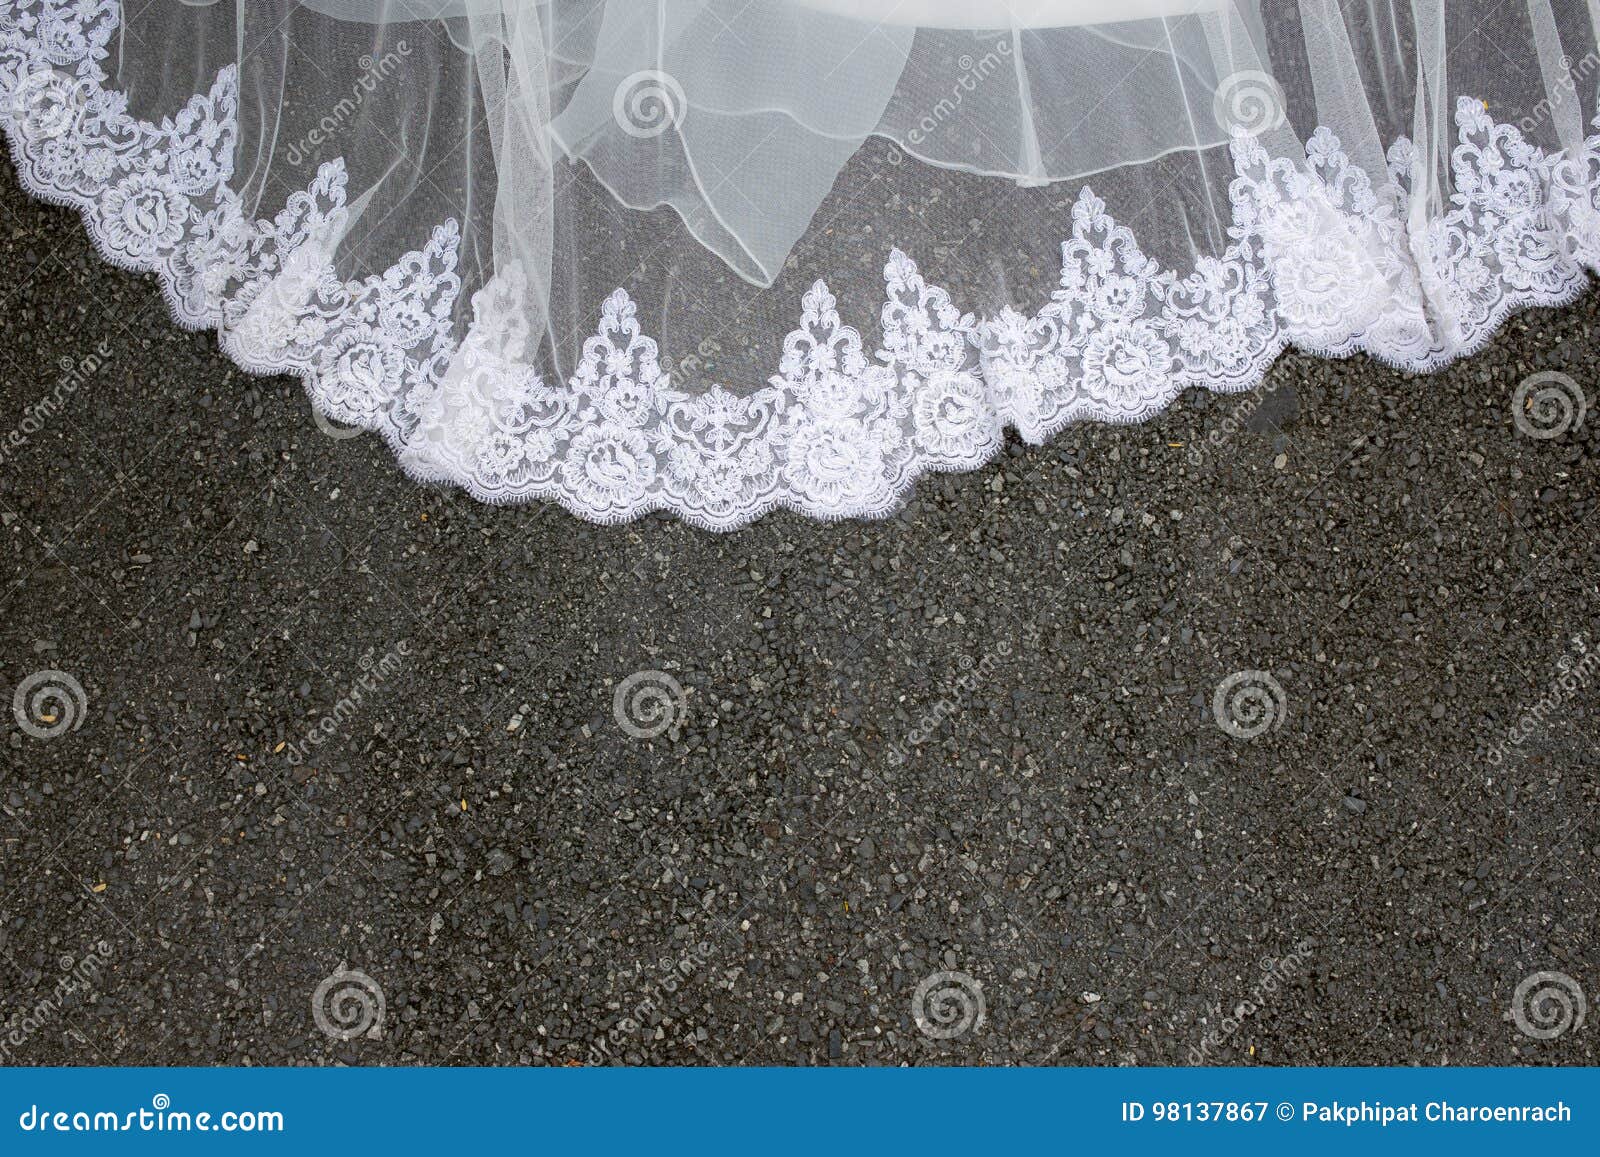 Part of Beautiful Wedding Dress on the Ground. Stock Image - Image of ...